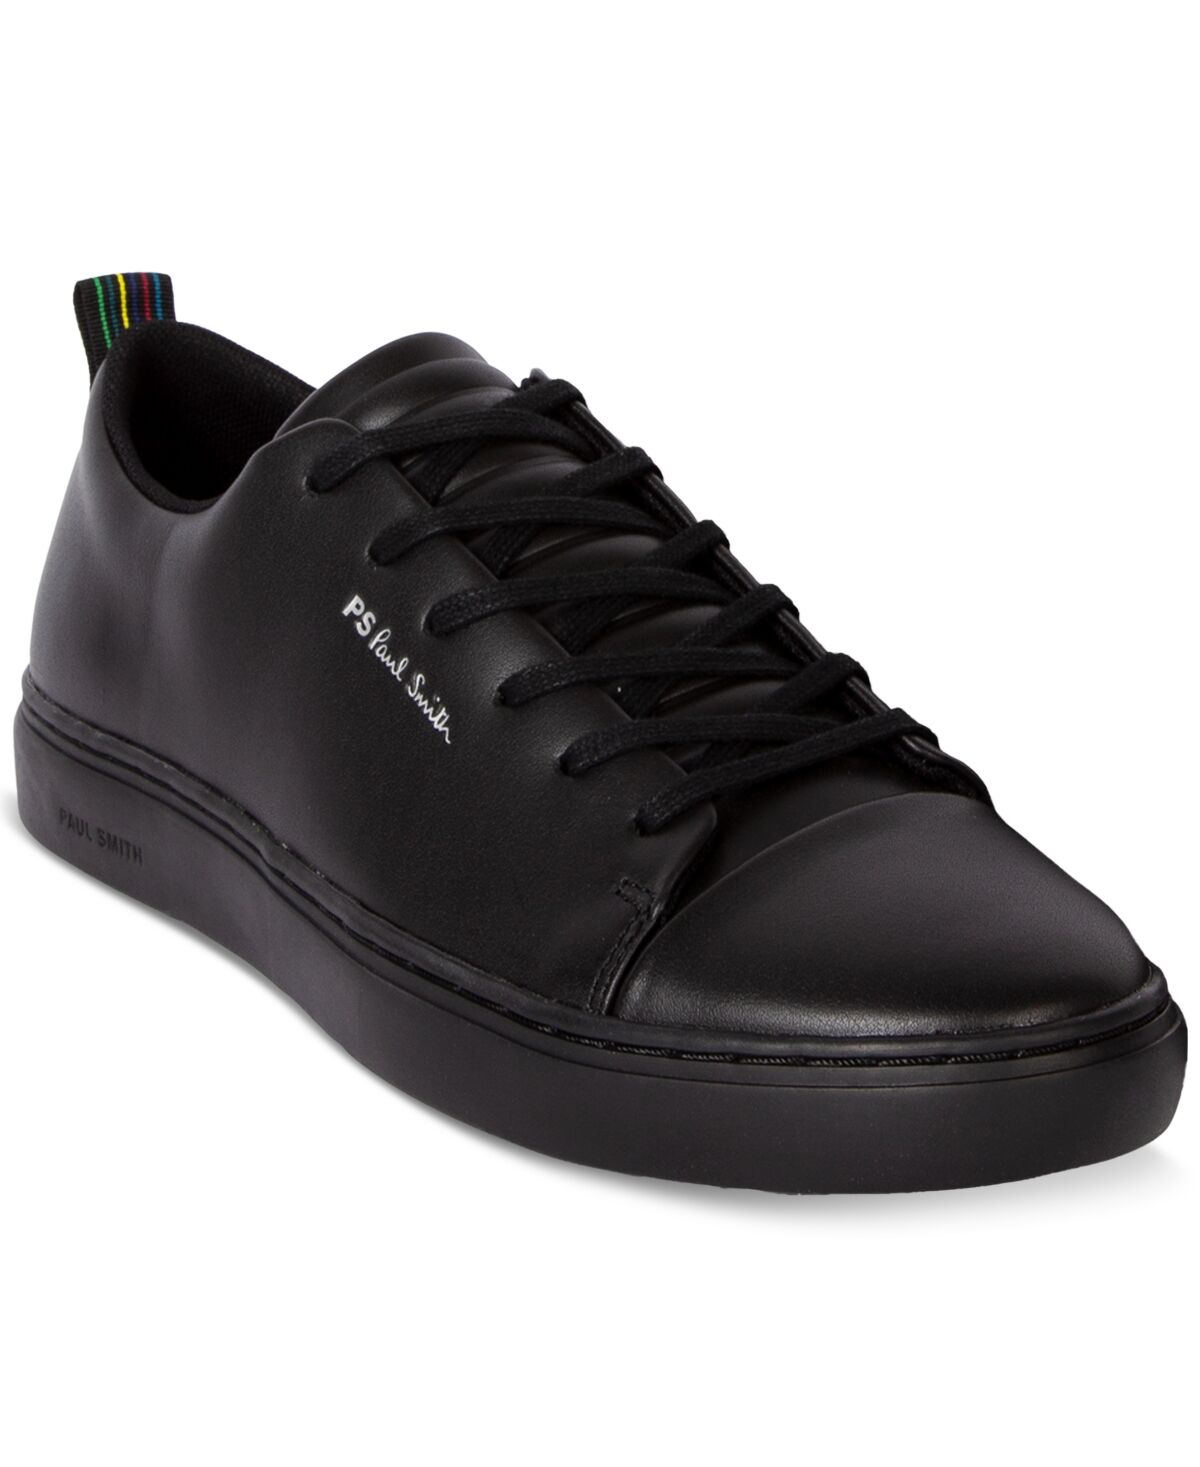 Paul Smith Men's Lee Black Tape Leather Low-Top Sneaker - Black